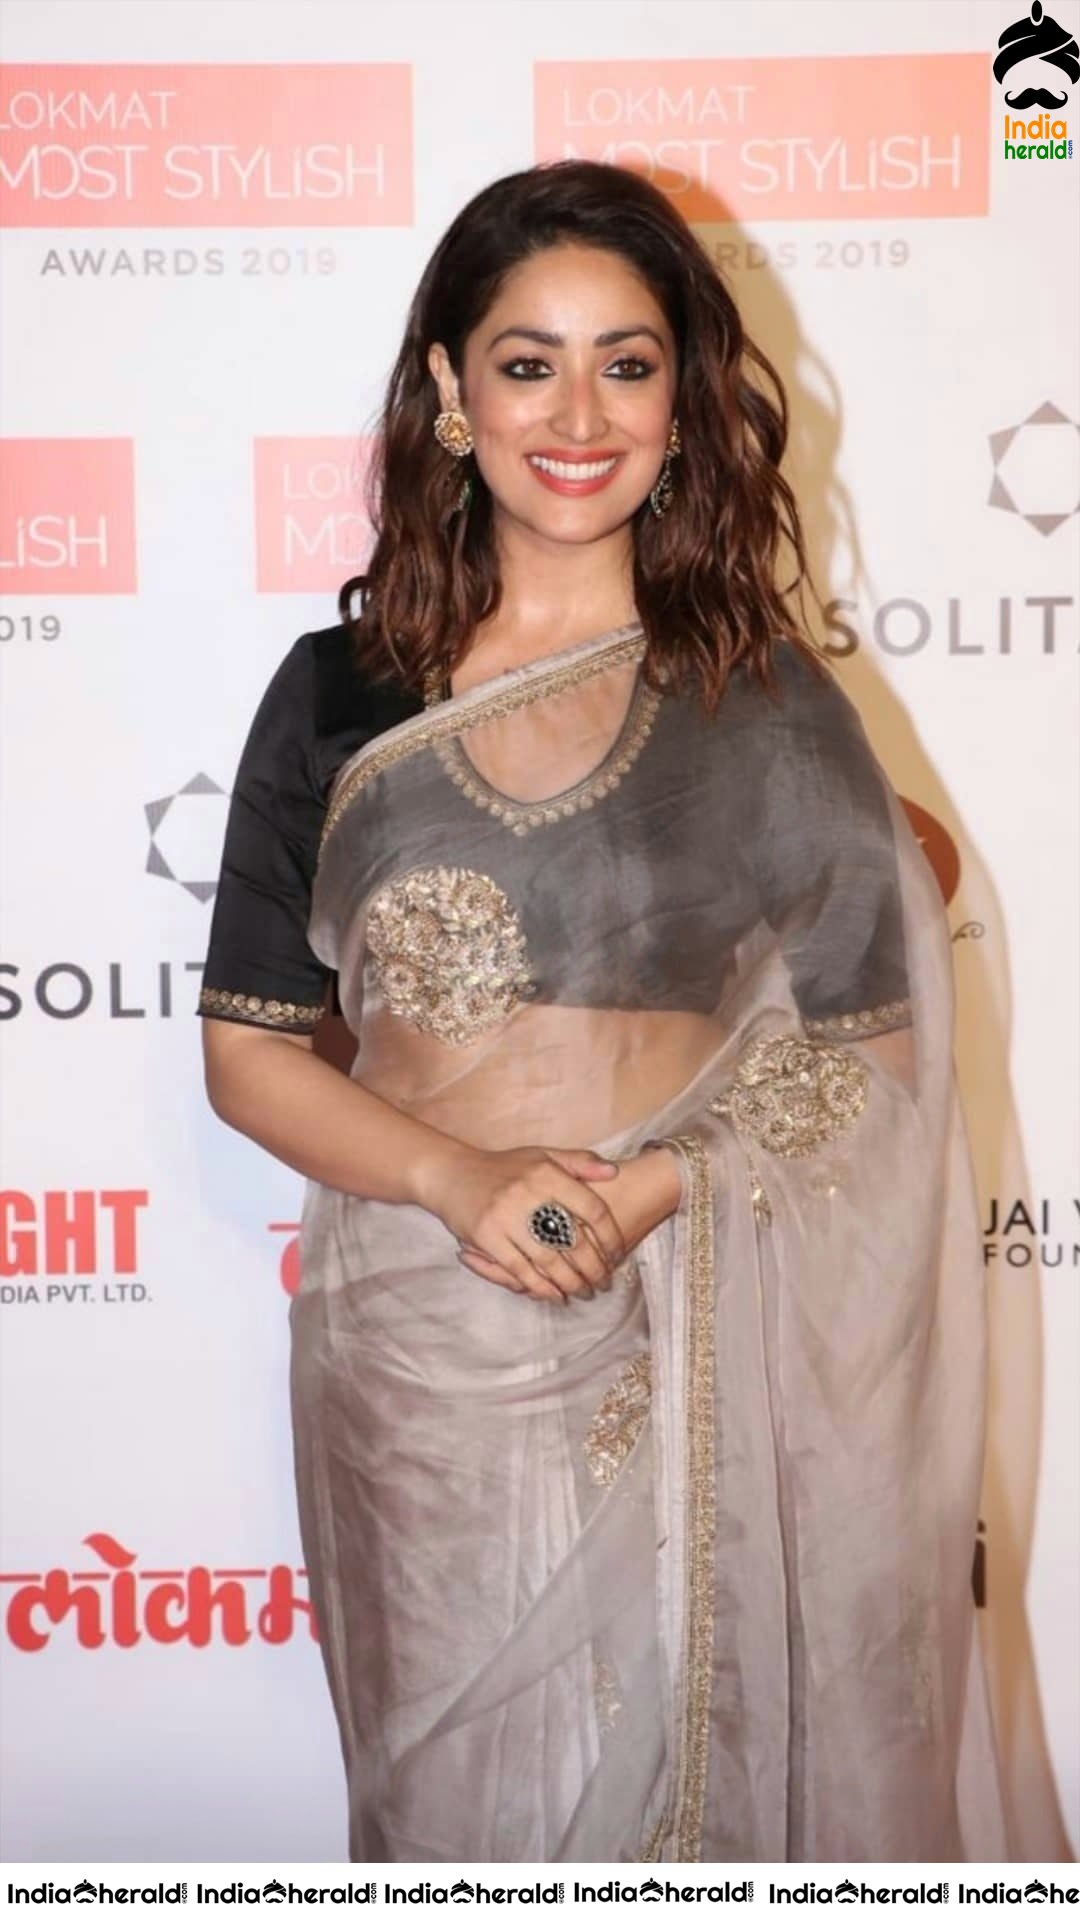 Yami Gautam in Transparent Saree at Lokmat Most Stylish awards 2019 Set 1